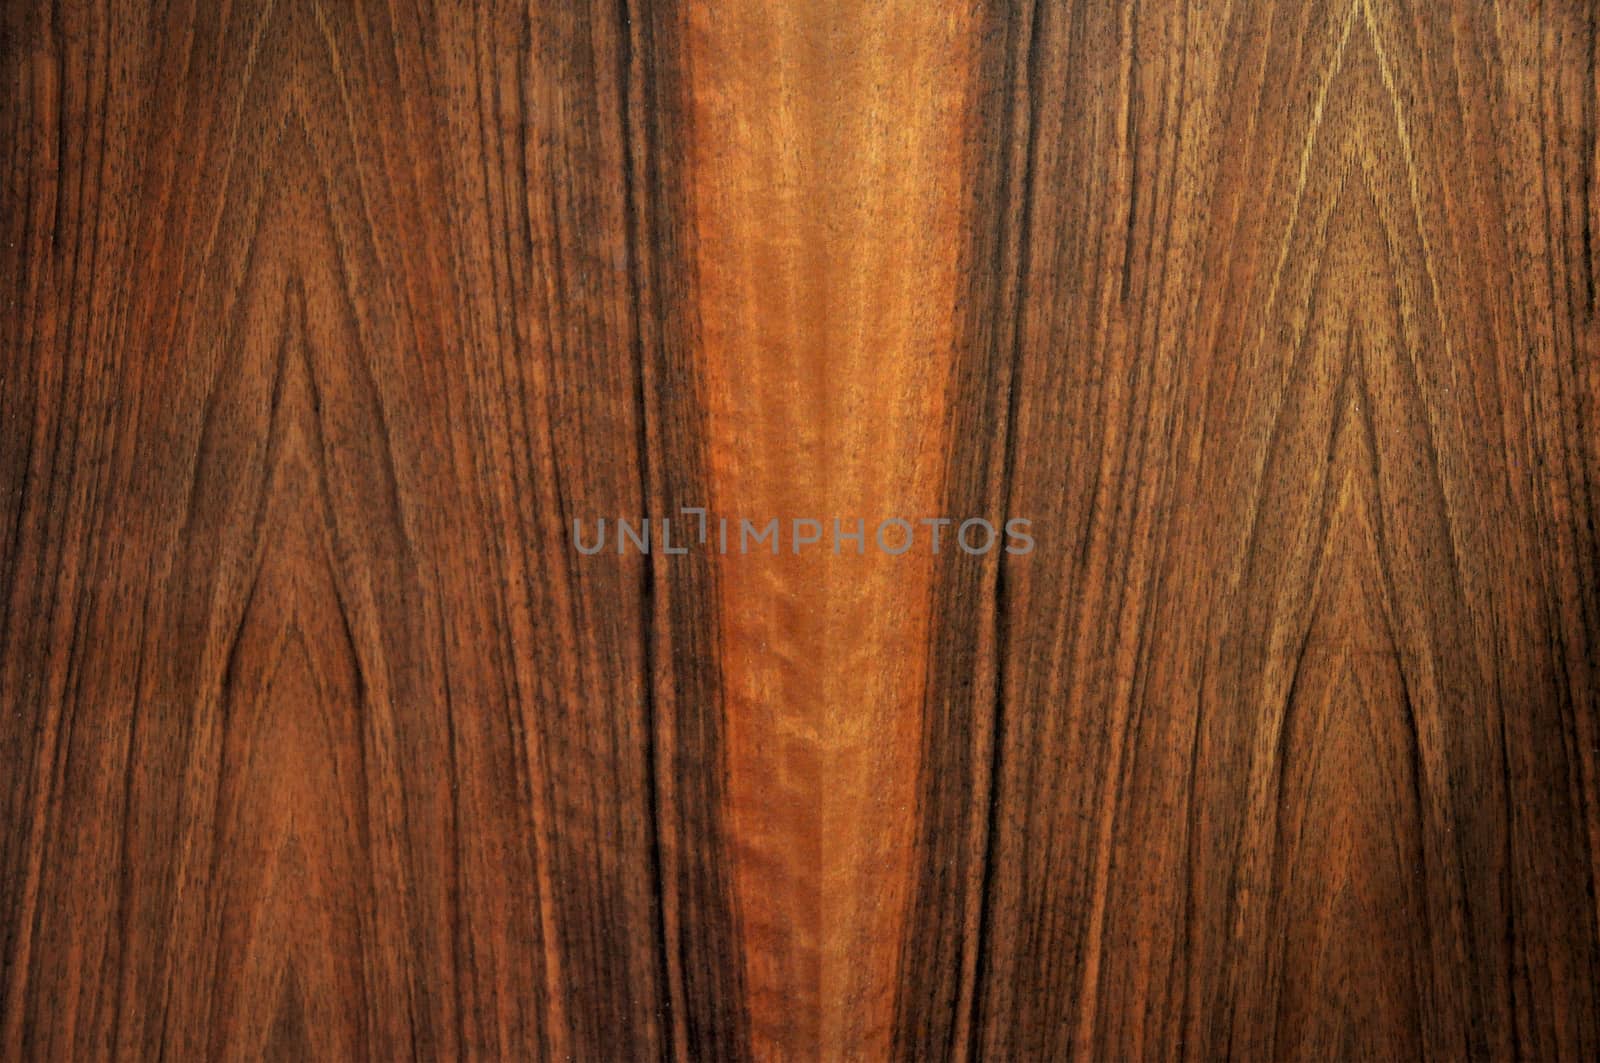 walnut wood grain texture by AlessandraSuppo